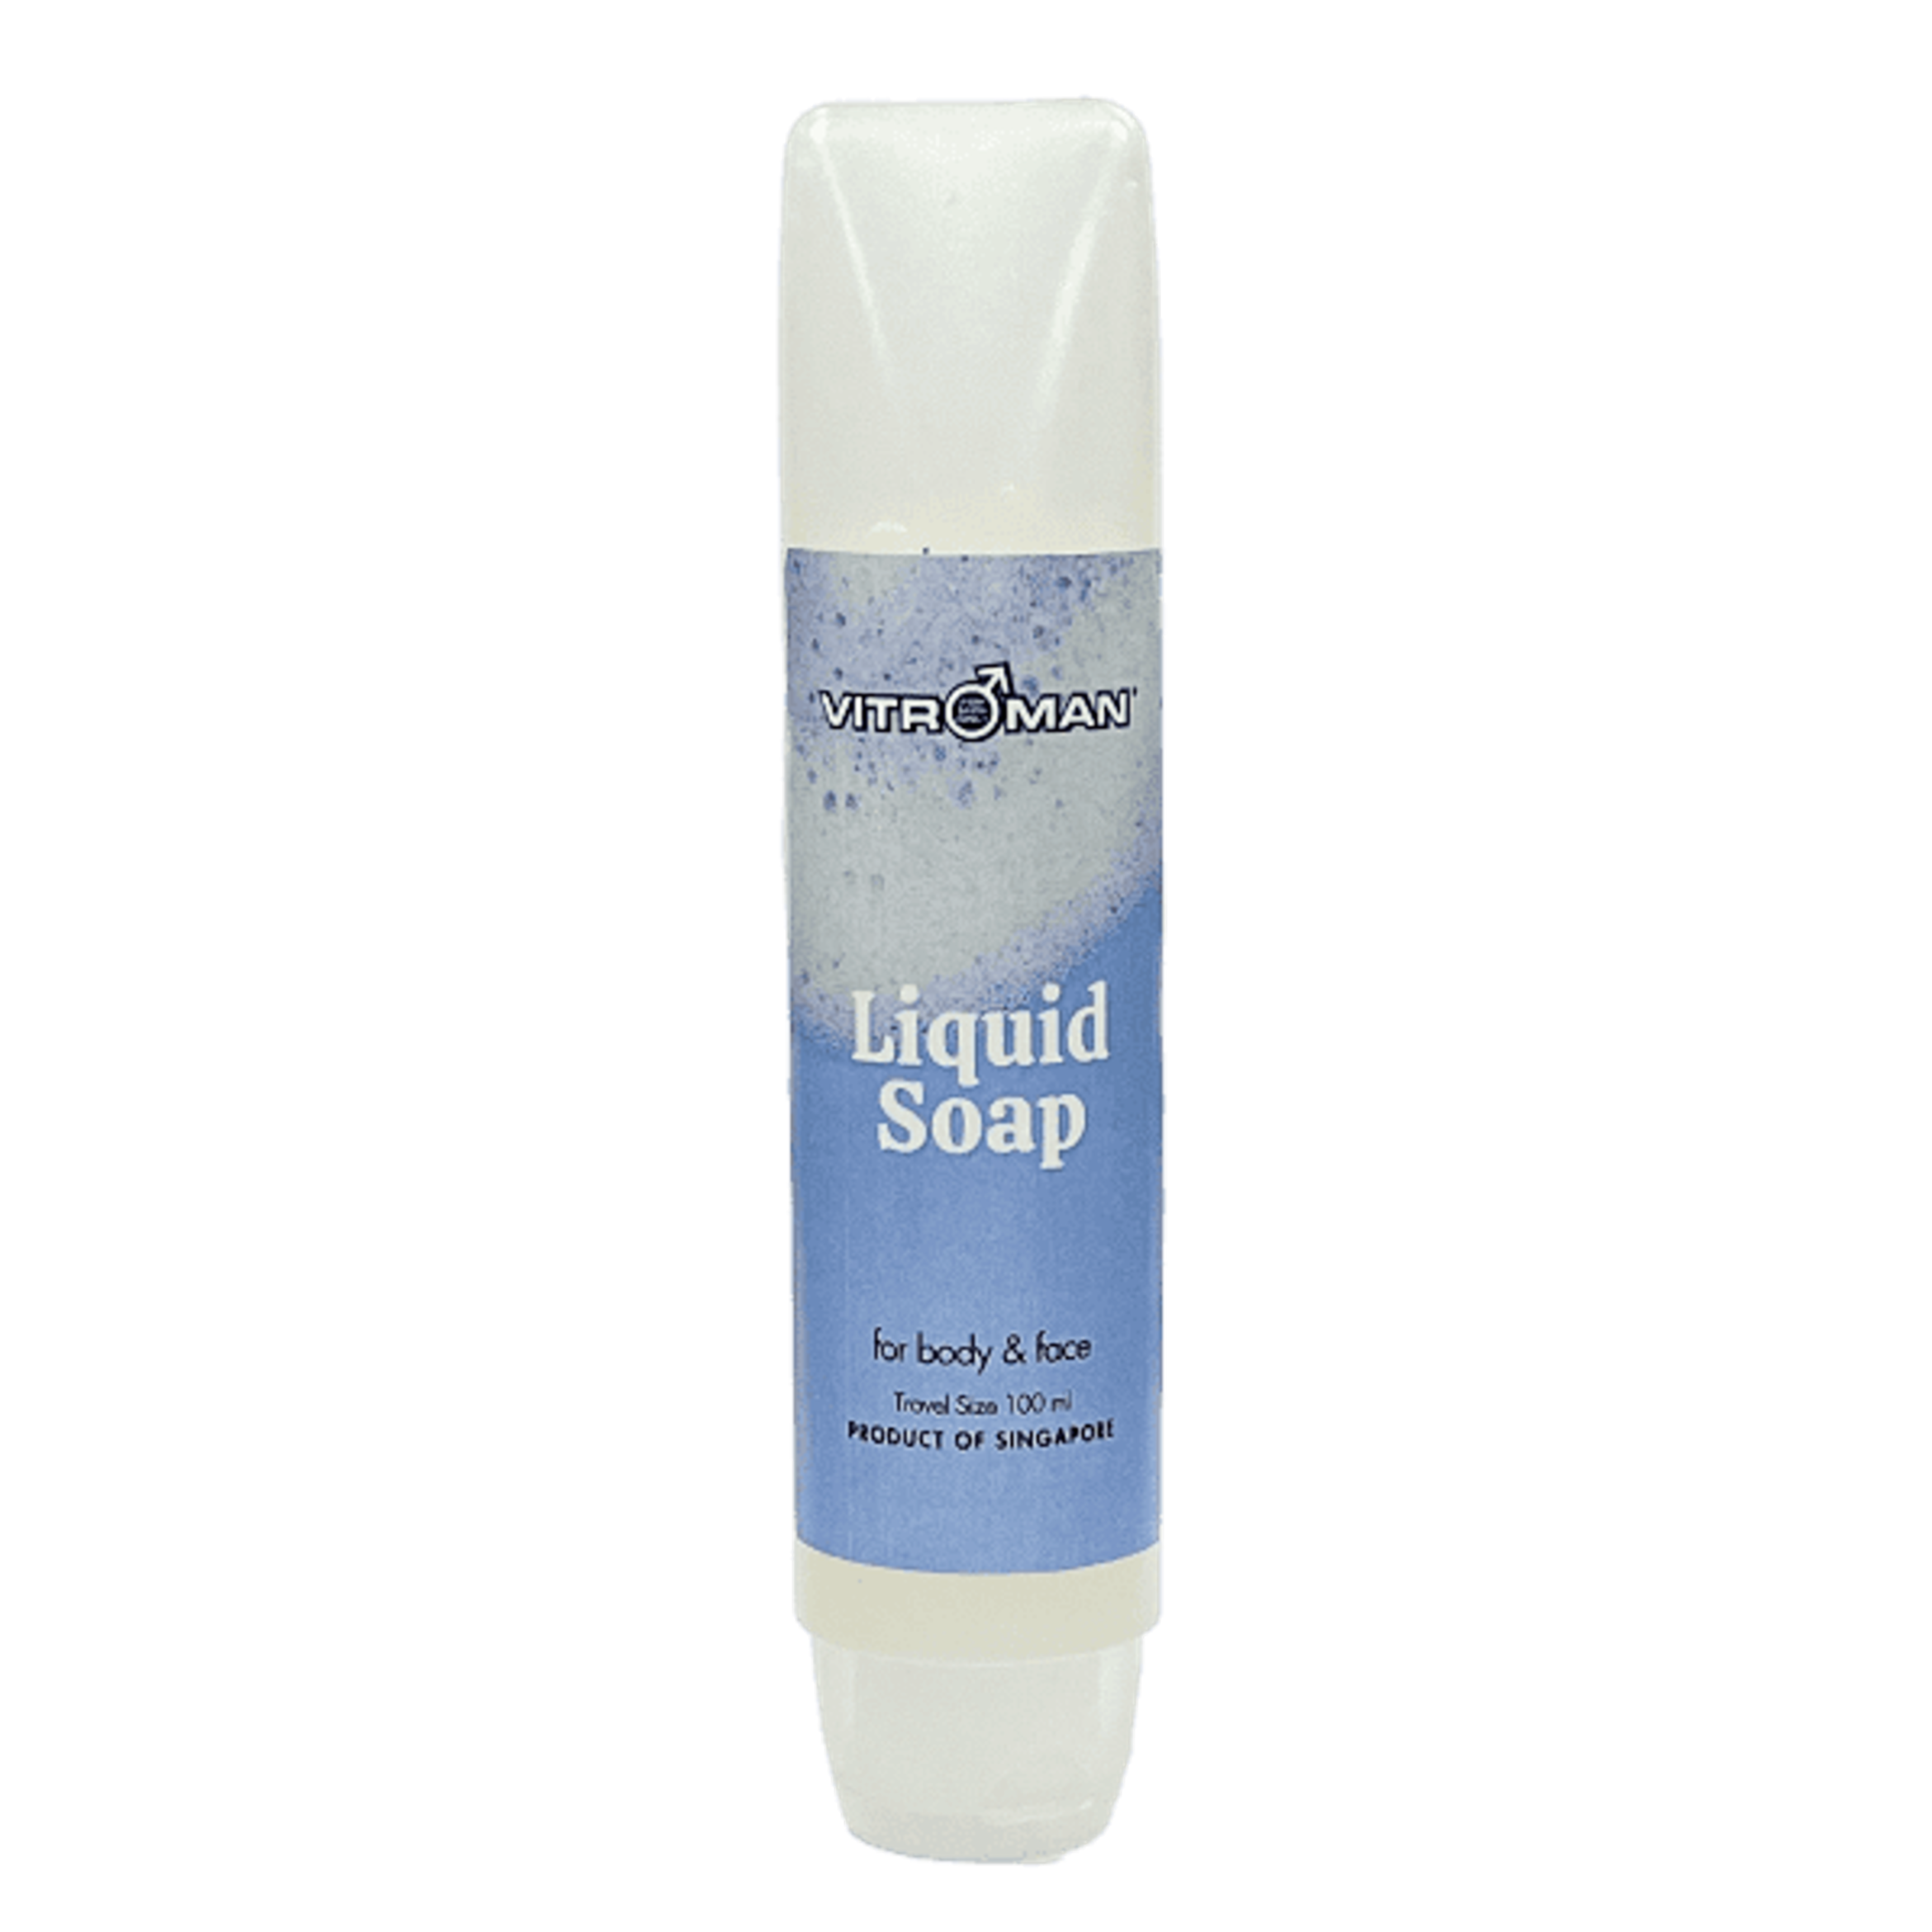 Vitroman Liquid Soap